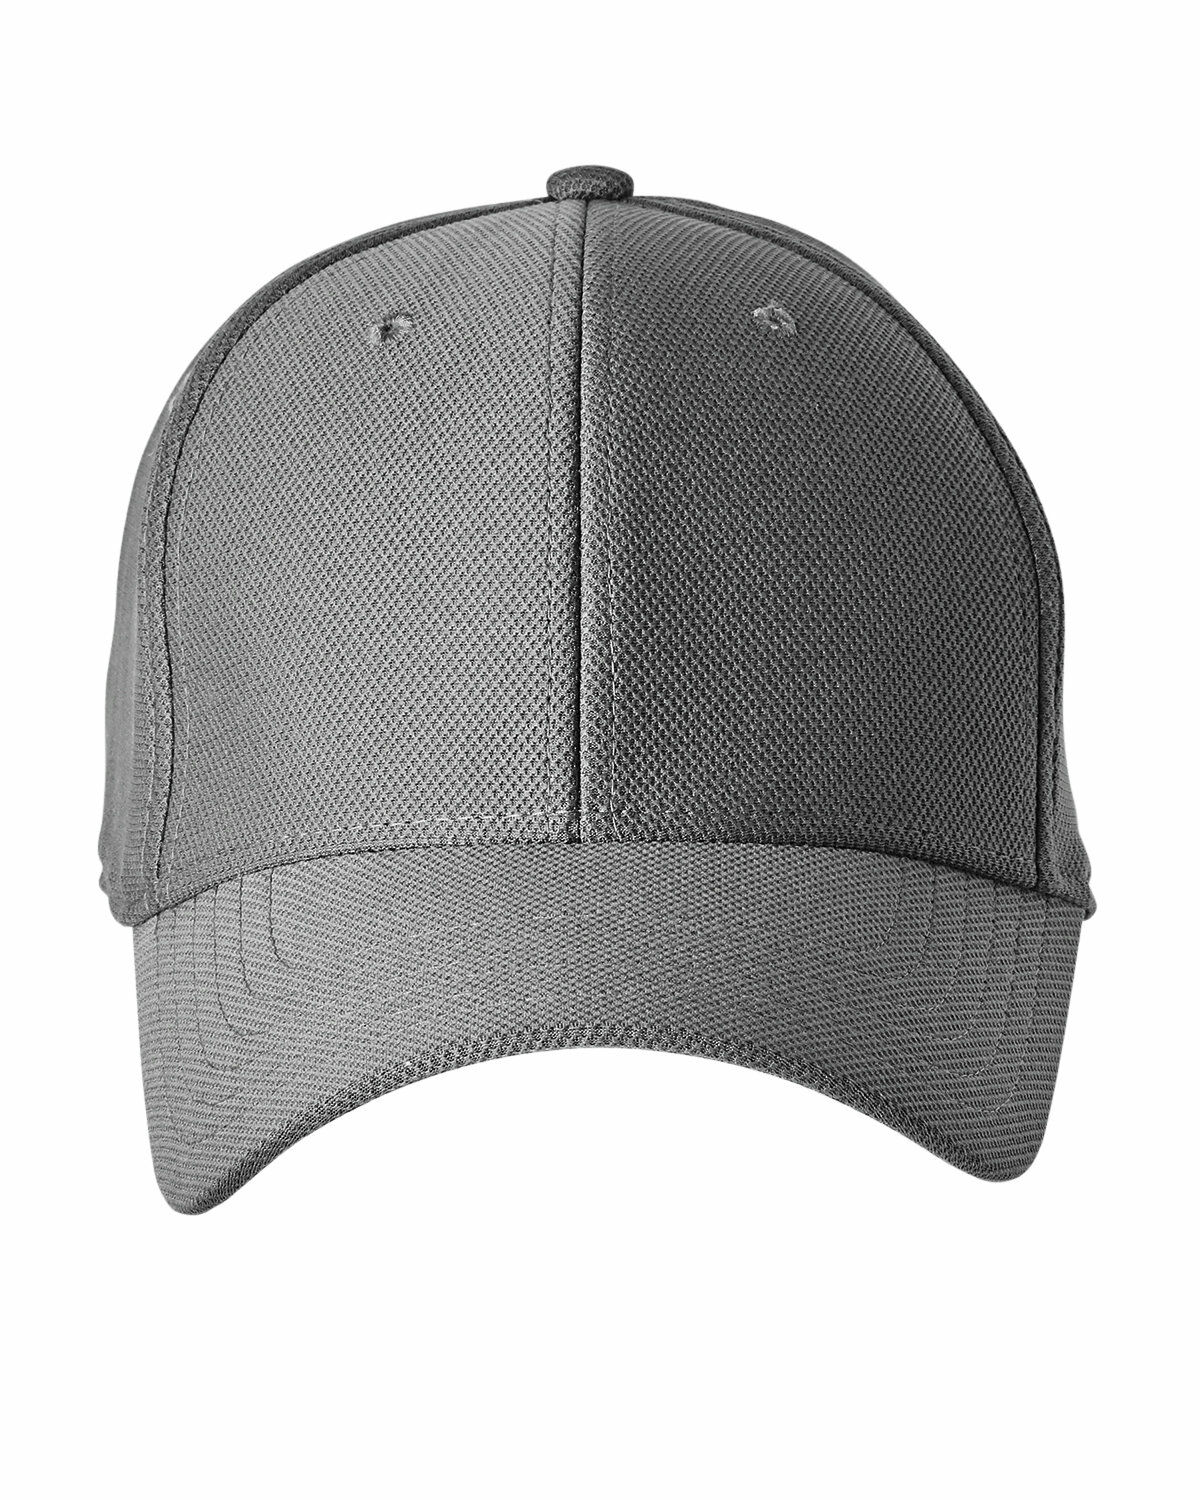 Custom Branded Under Armour Hats - Graphite